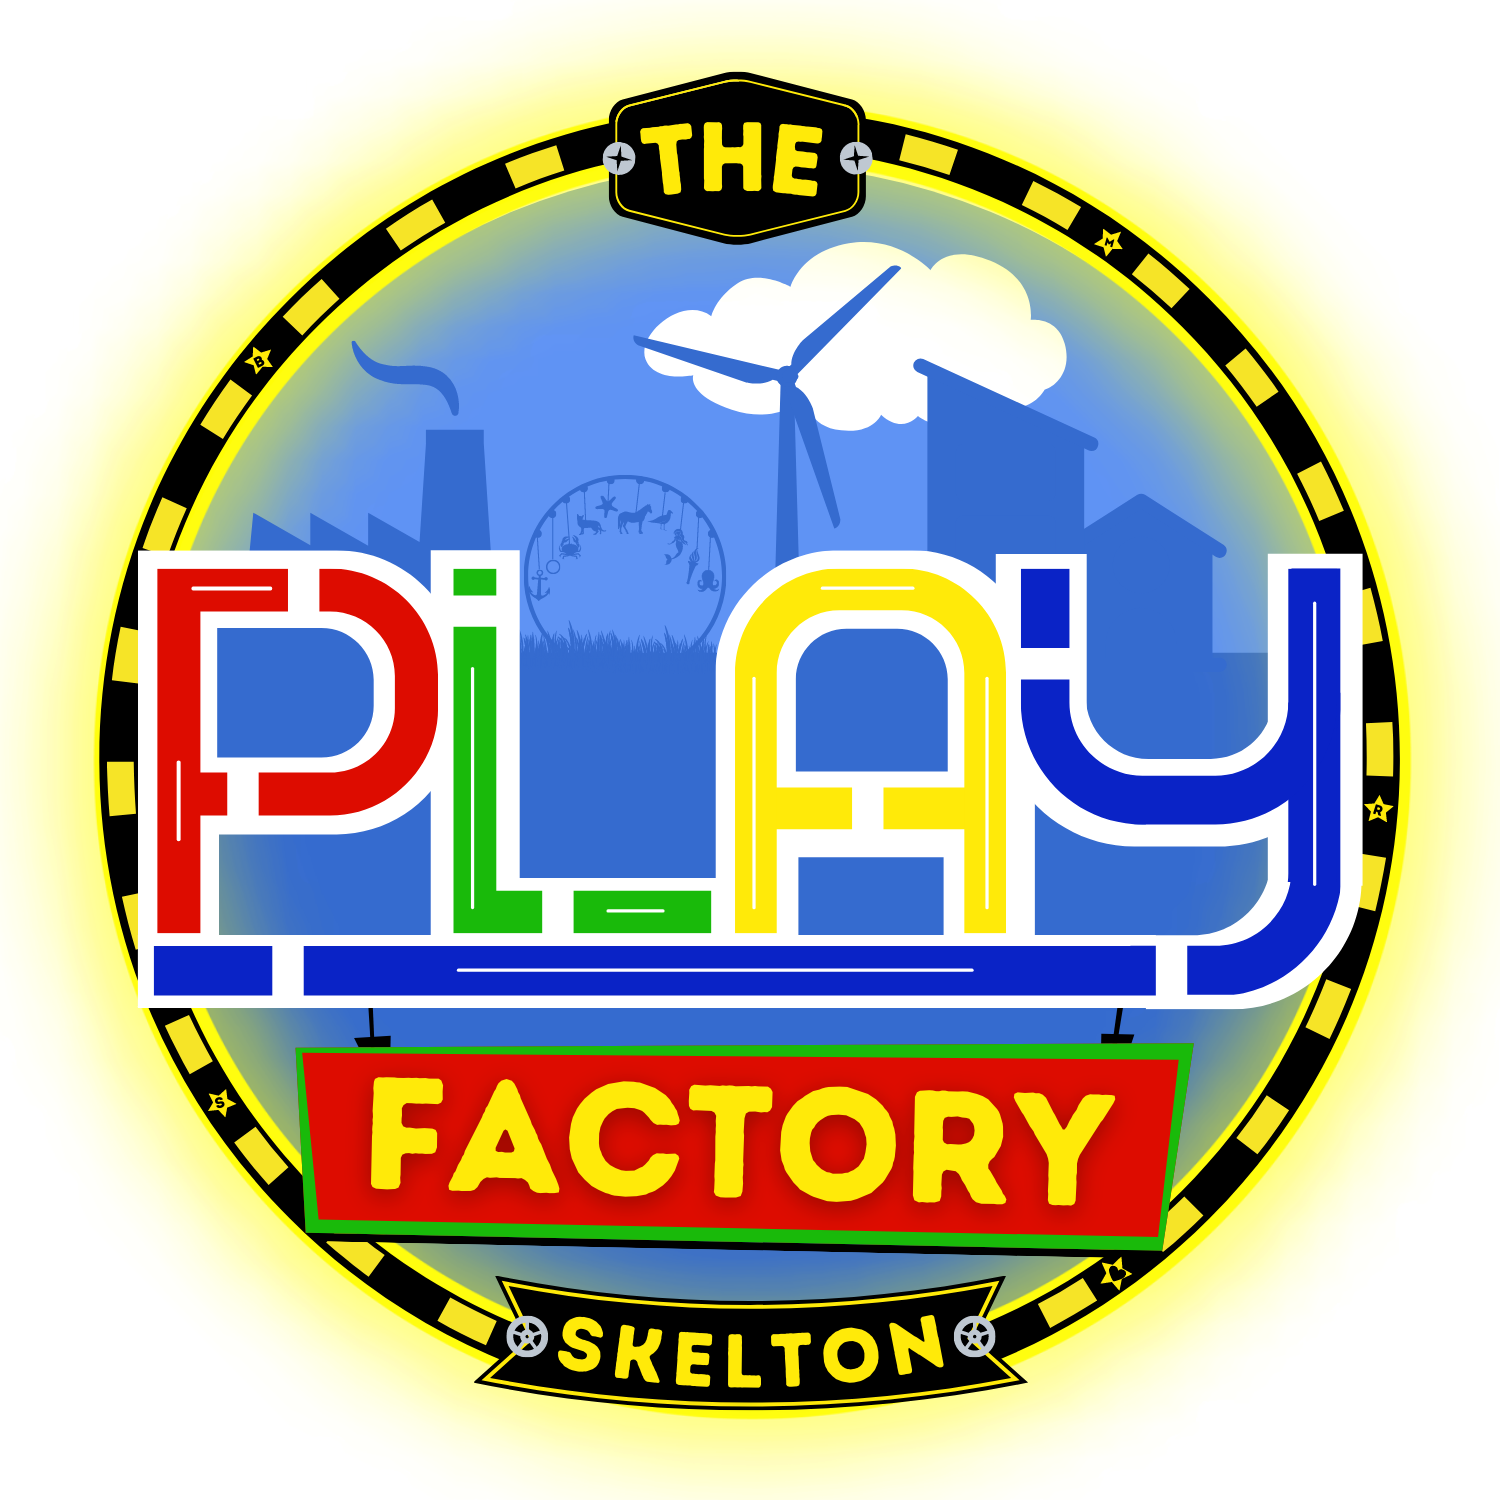 Play Factory Skelton